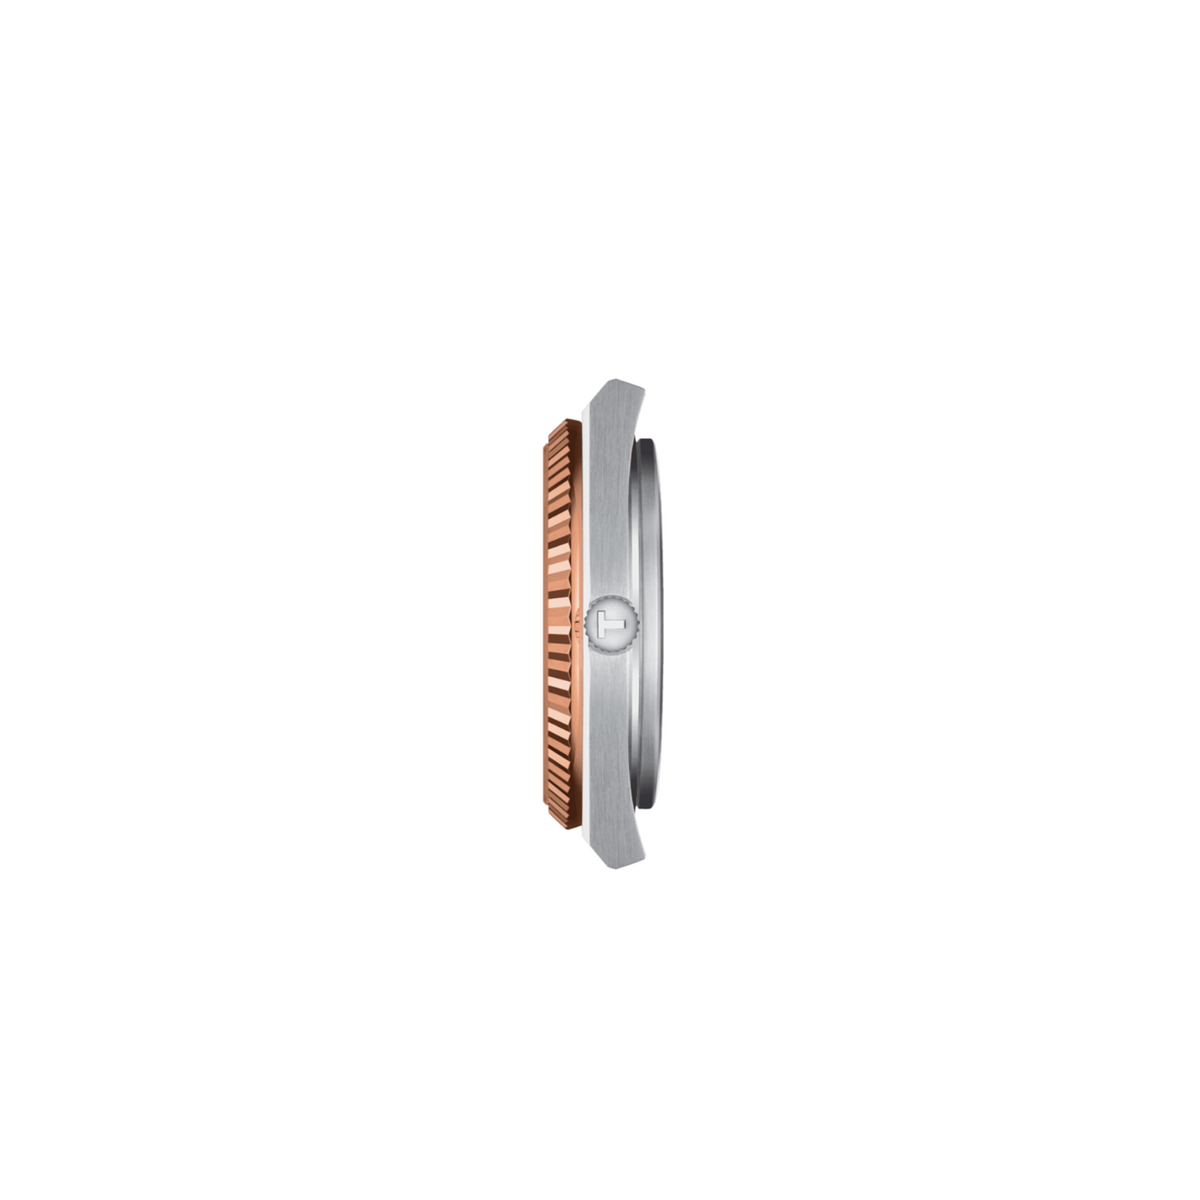 Tissot PRX Men's 40mm Automatic Watch T931.407.41.031.00